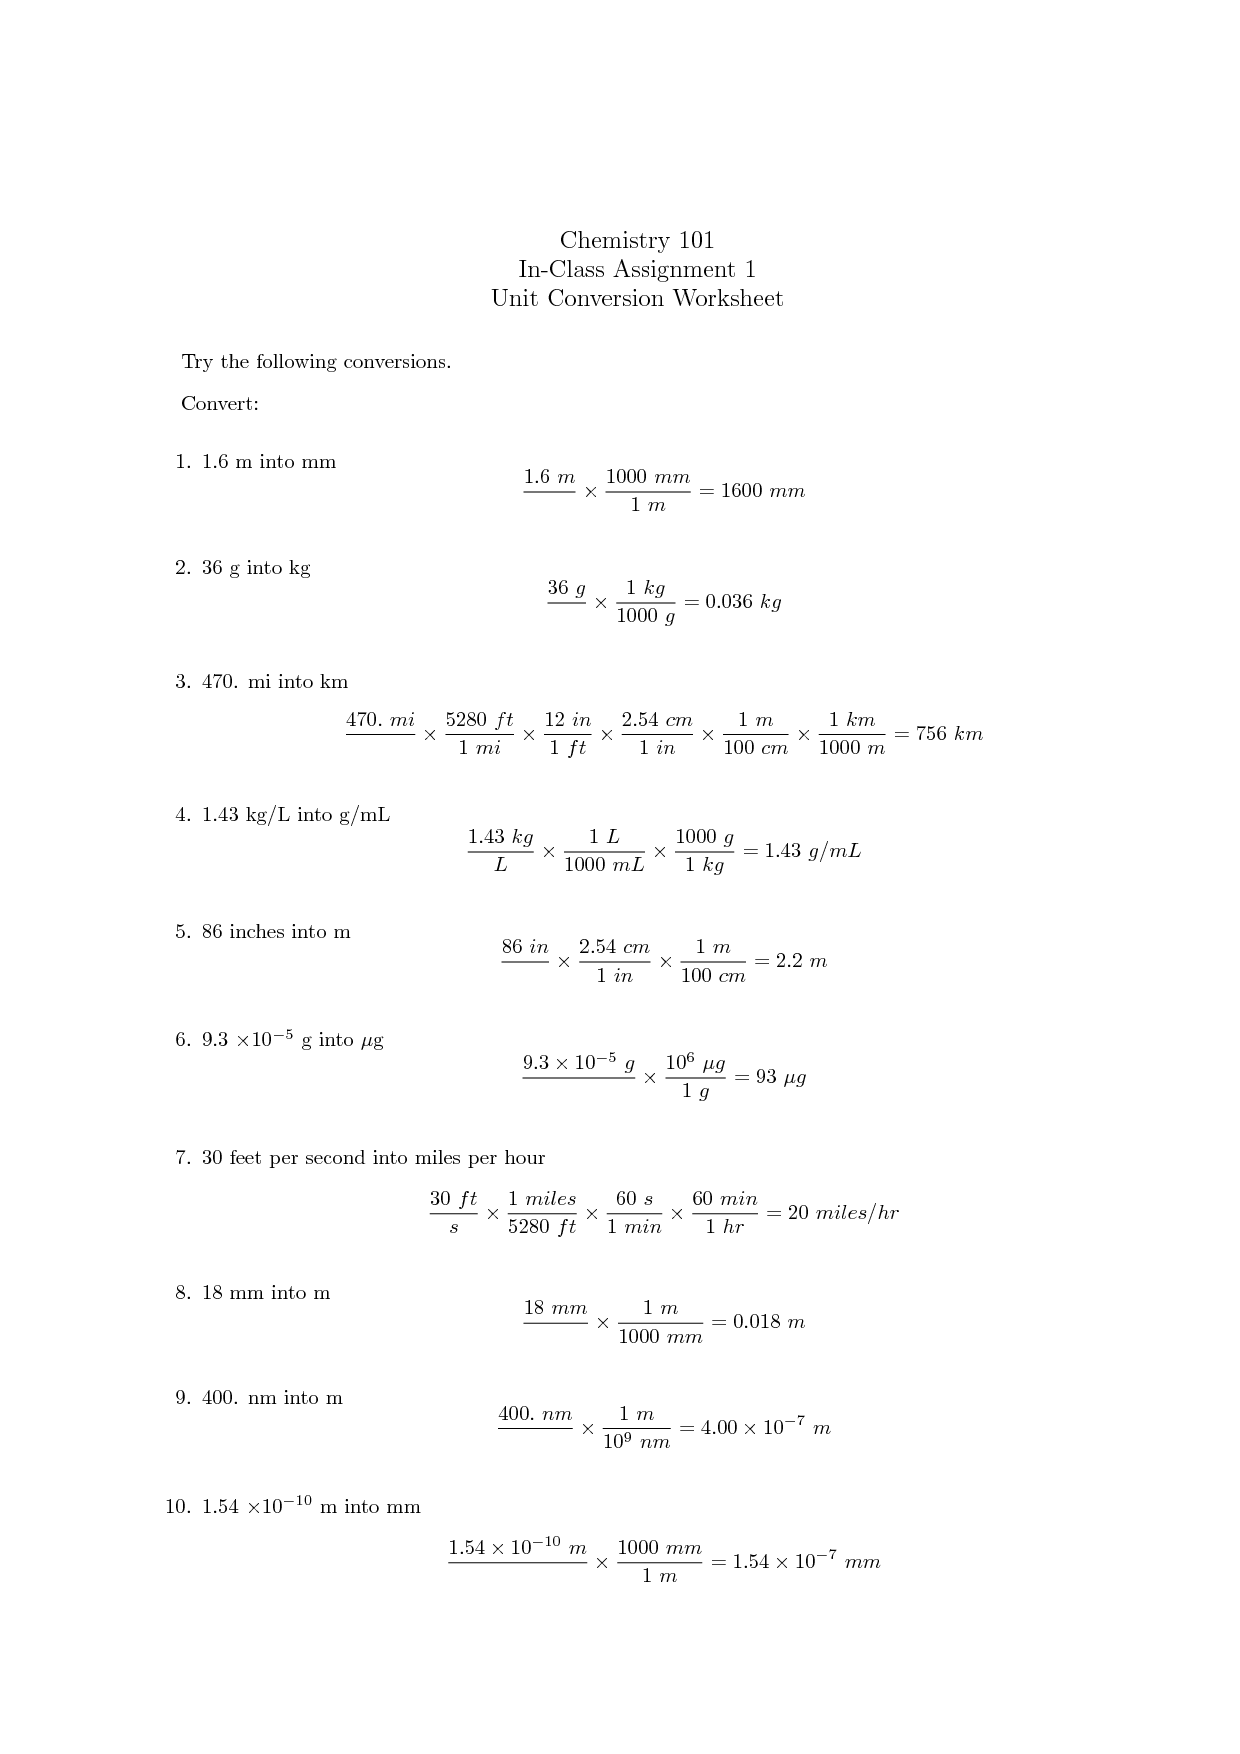 Chemistry Unit Conversions Worksheet Image